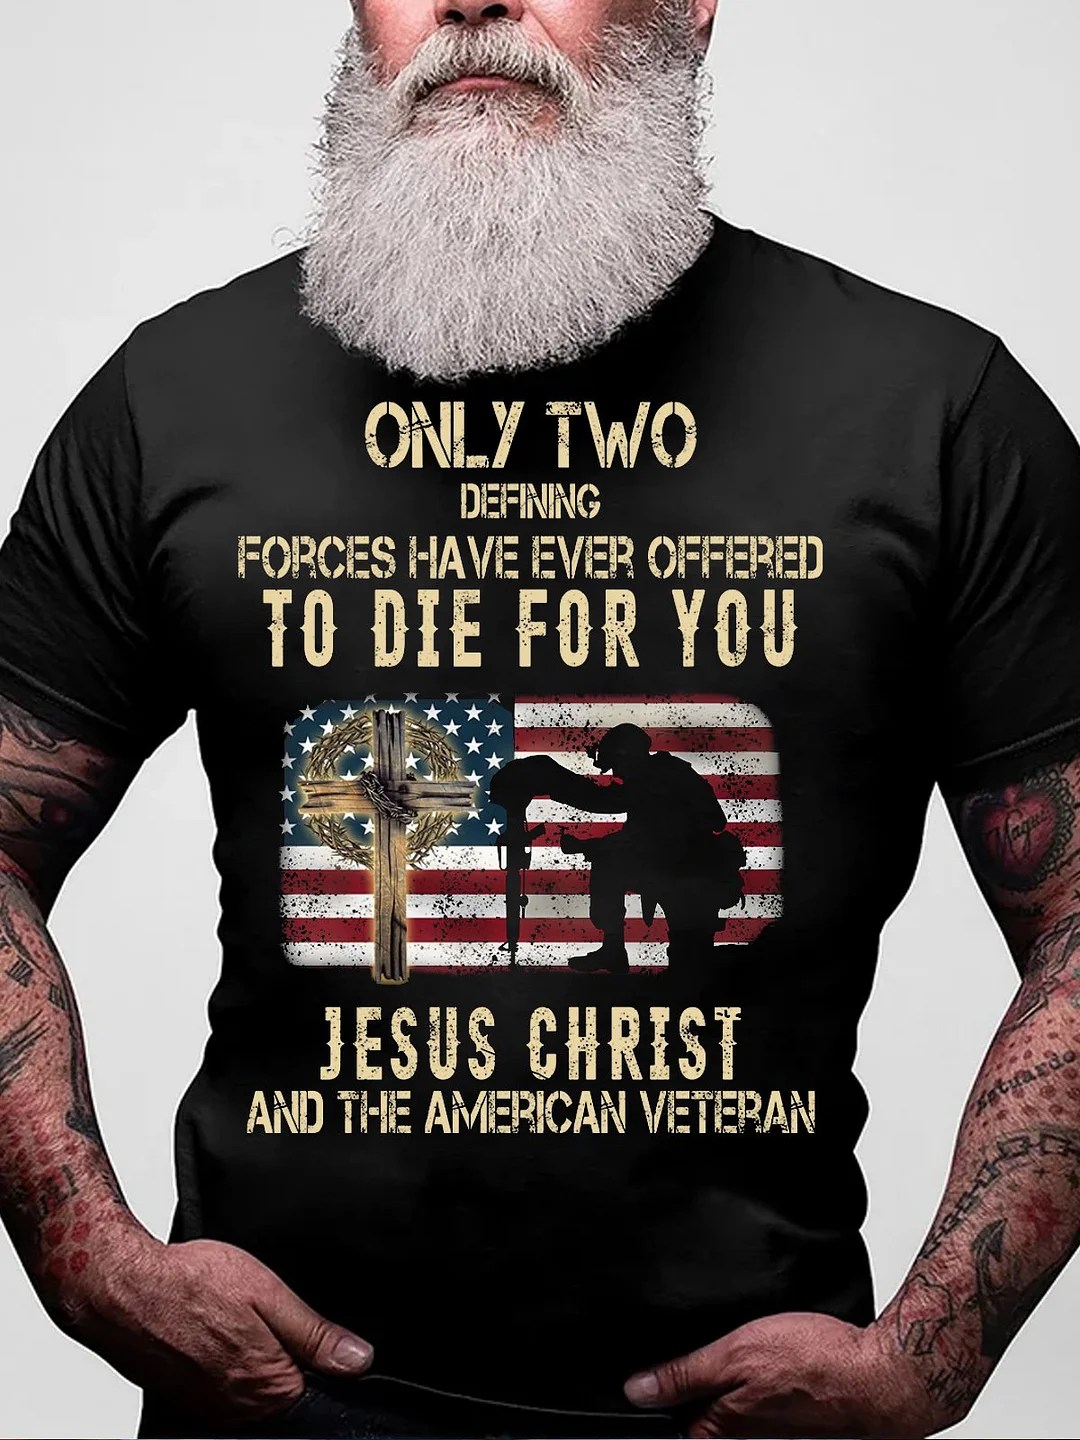 Jesus Christ And The American Veteran Short Sleeve Cotton Short Sleeve T-Shirt